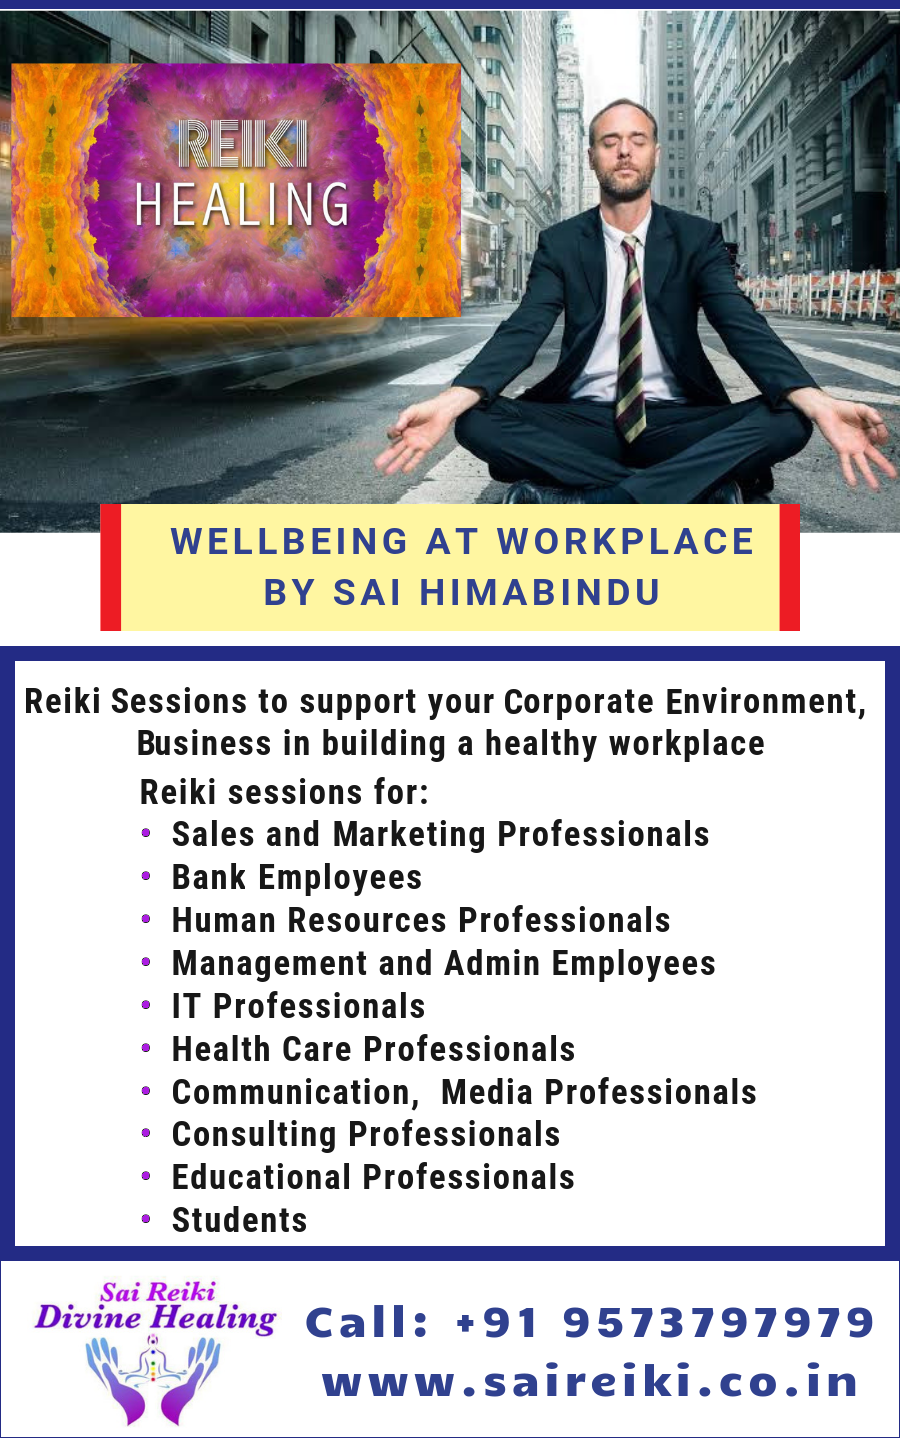 Wellbeing and Stress Management at workplace by Sai Hima Bindu - Mumbai